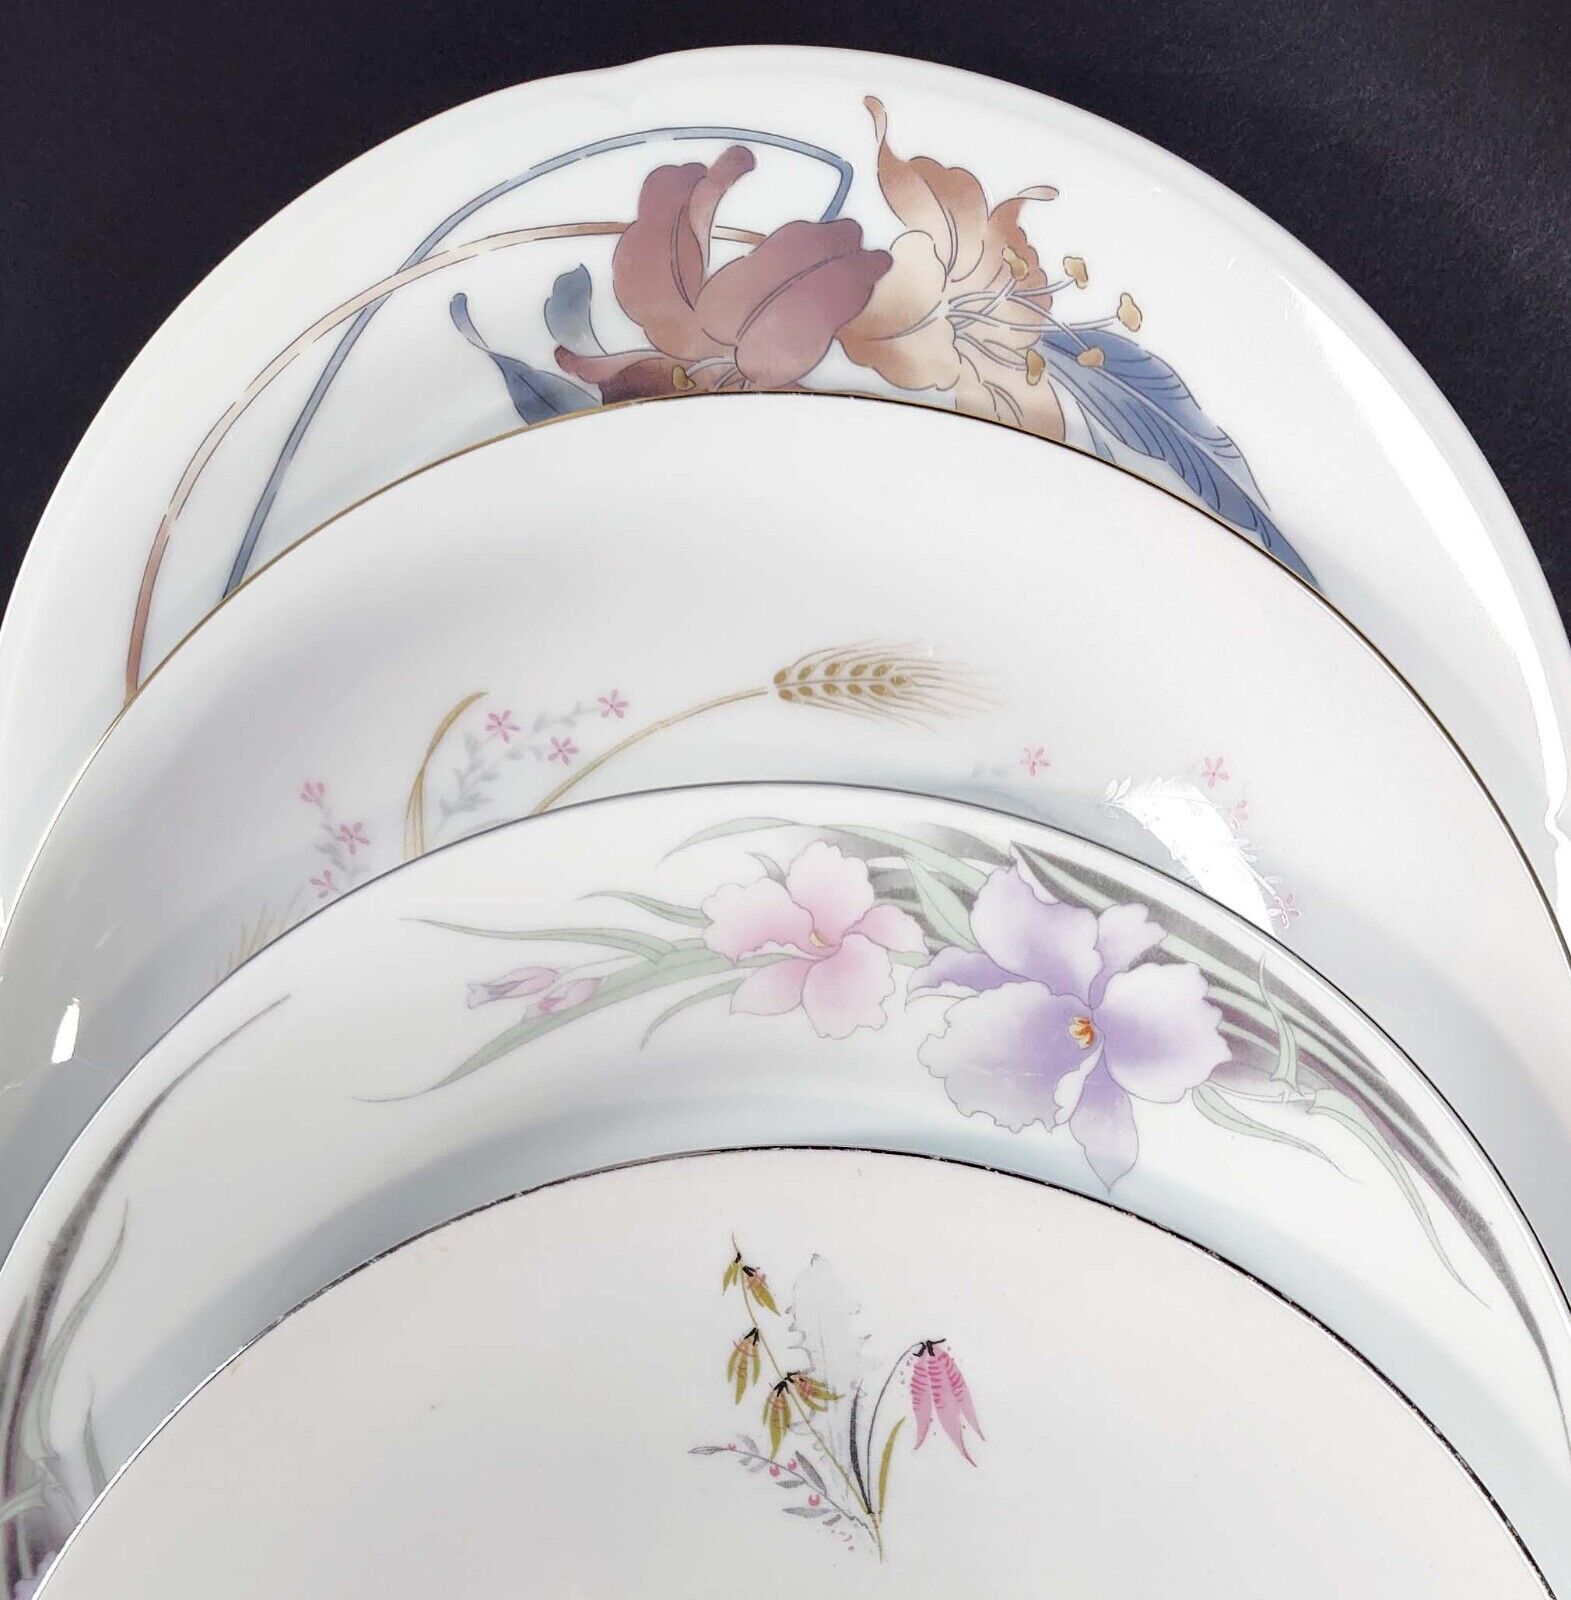 Mismatched Dinner Plates Vintage Floral China Plates Pink Mixed Patterns Set/4